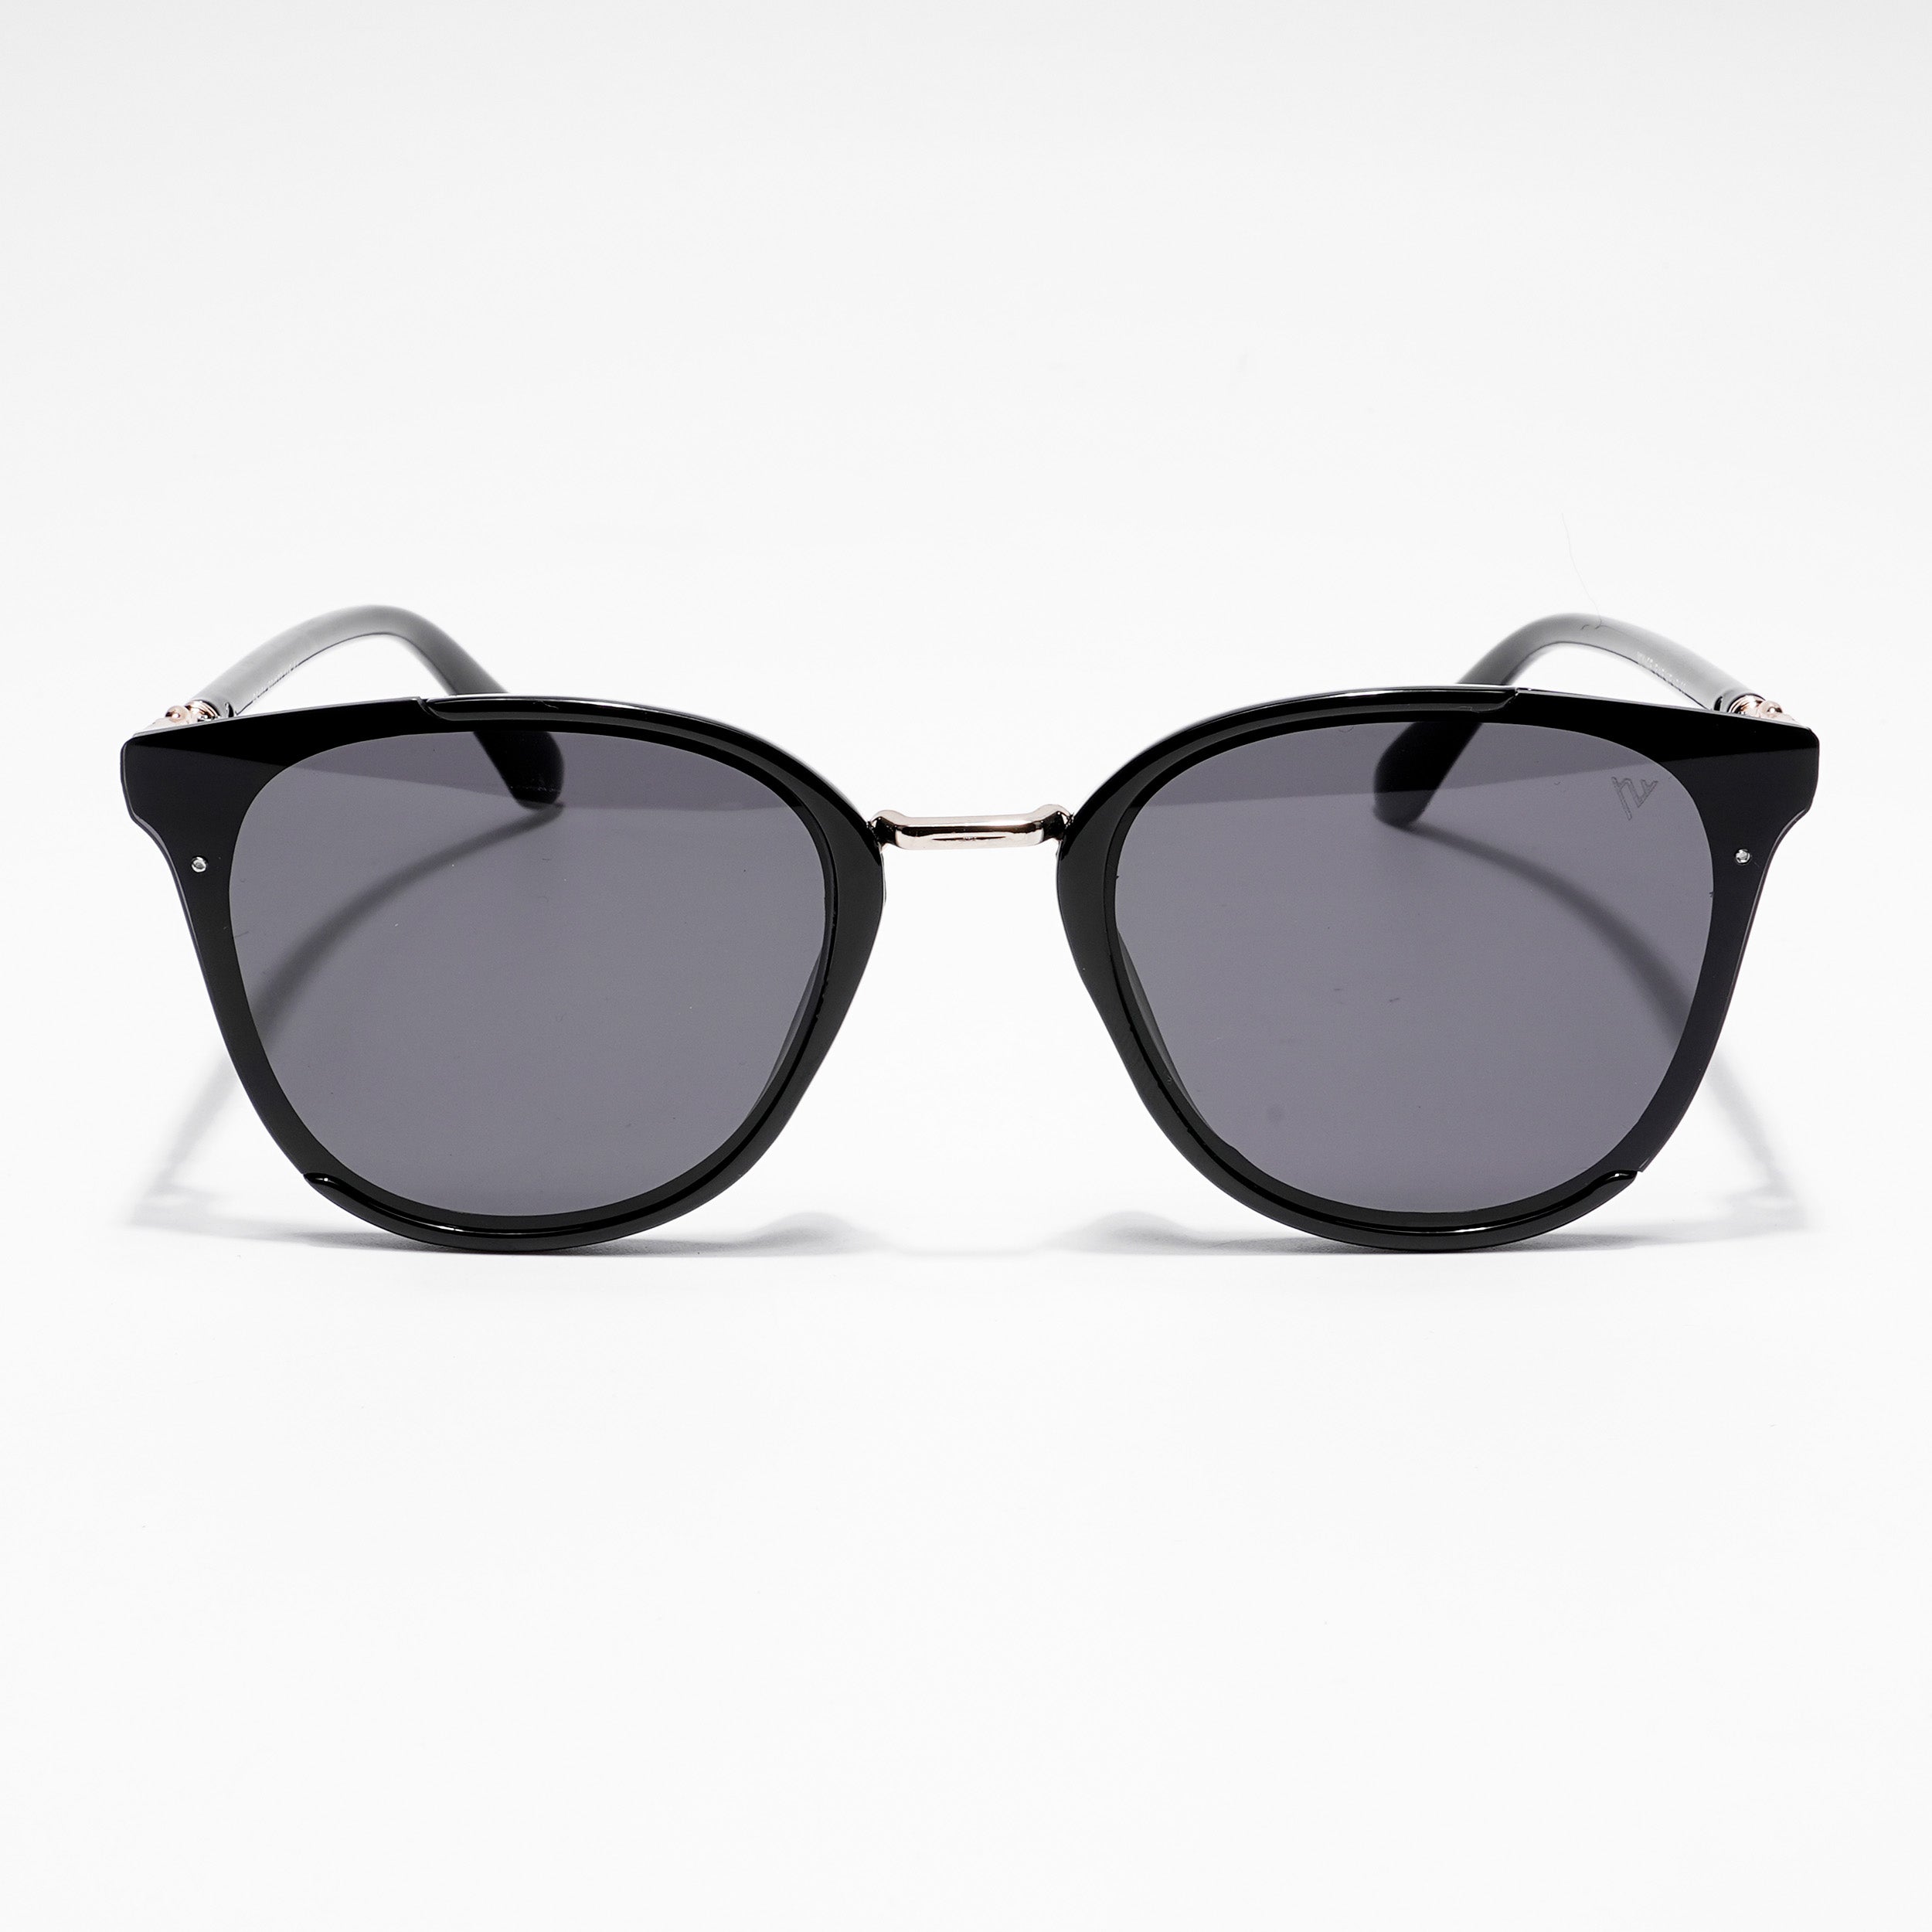 Voyage Cateye Sunglasses for Women (Black Lens | Black Frame - MG3175)